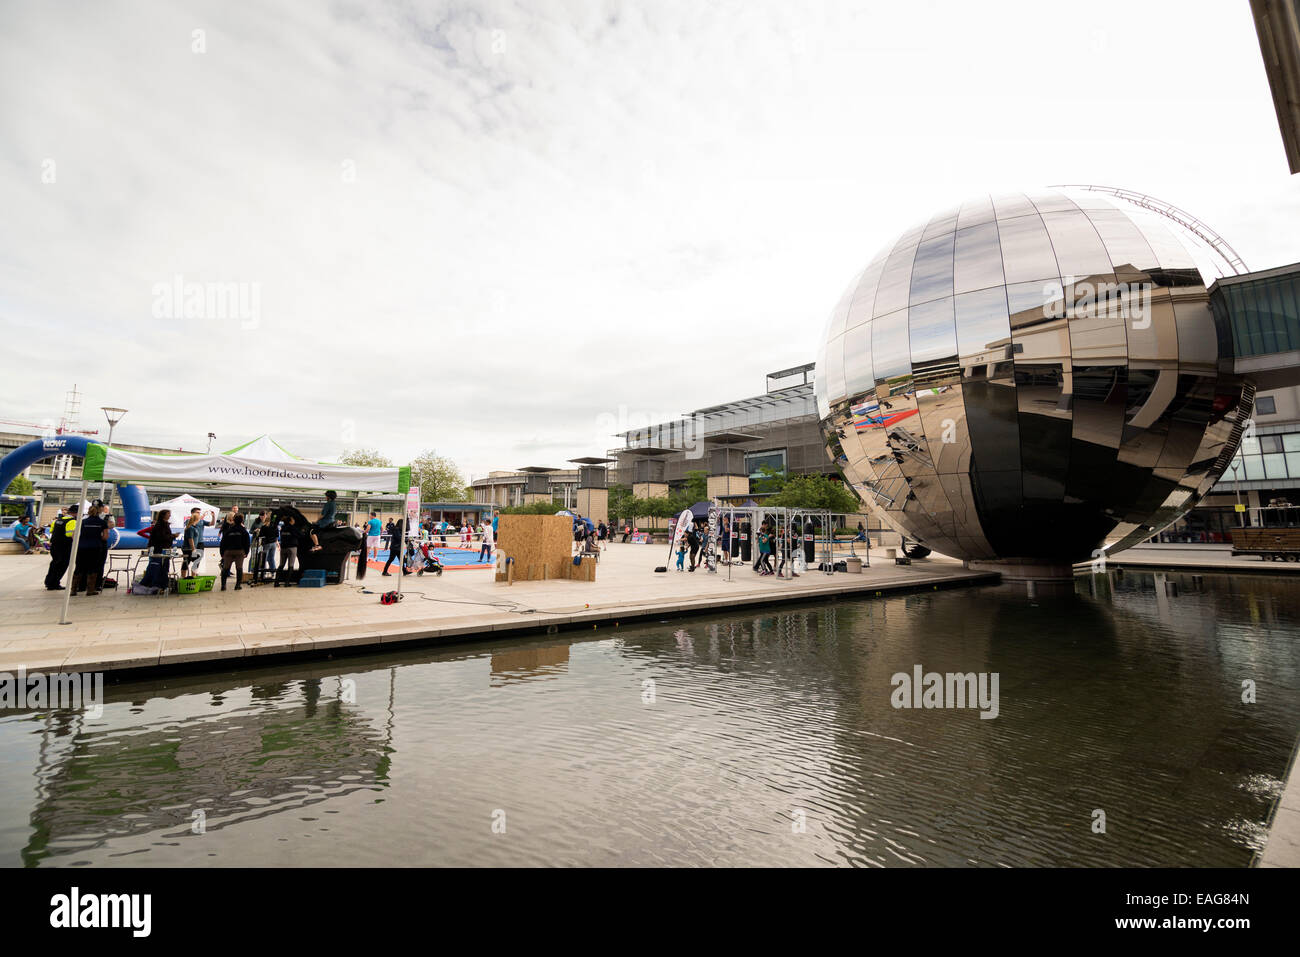 BRISTOL, UNITED KINGDOM - JUNE 3, 2014: People enjoying the weather walk past the stainless-steel sphere of the planetarium, Mil Stock Photo